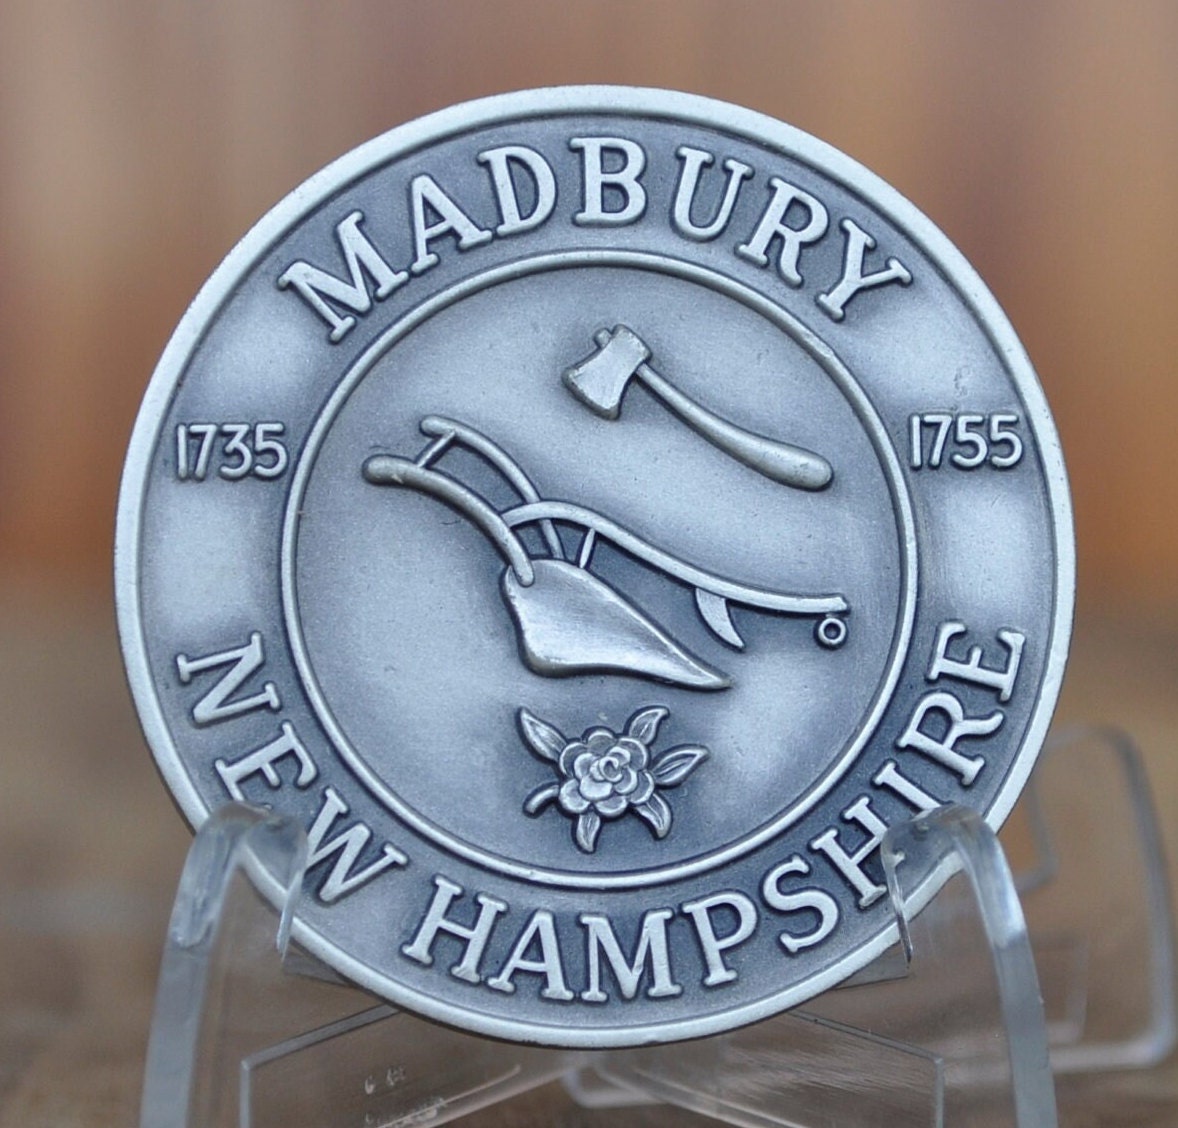 Madbury NH 200th Anniversary Medal - Silver, Bronze - Choose by Metal - 1968 Madbury New Hampshire Anniversary Token - Town Medals